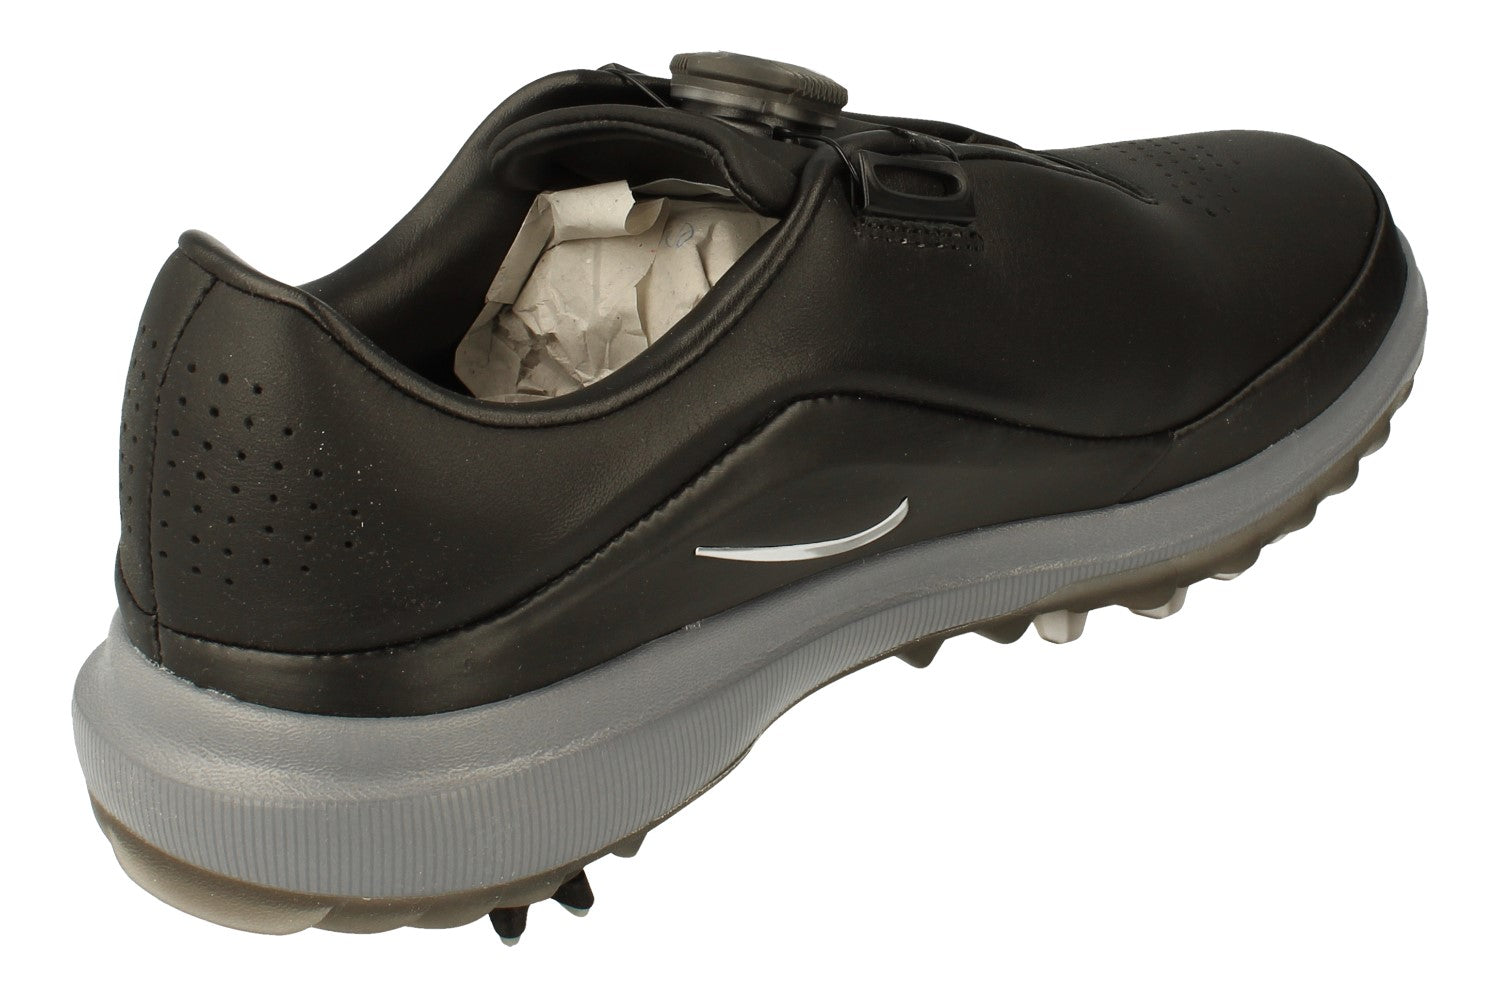 Buy Nike Air Zoom Precision BOA Mens Golf Shoes AH7101 Trainers (uk 8.5 us 9.5 eu 43, metallic silver 002) 002 - Free UK Super Fast EURO & USA Delivery! KicksWorldwide